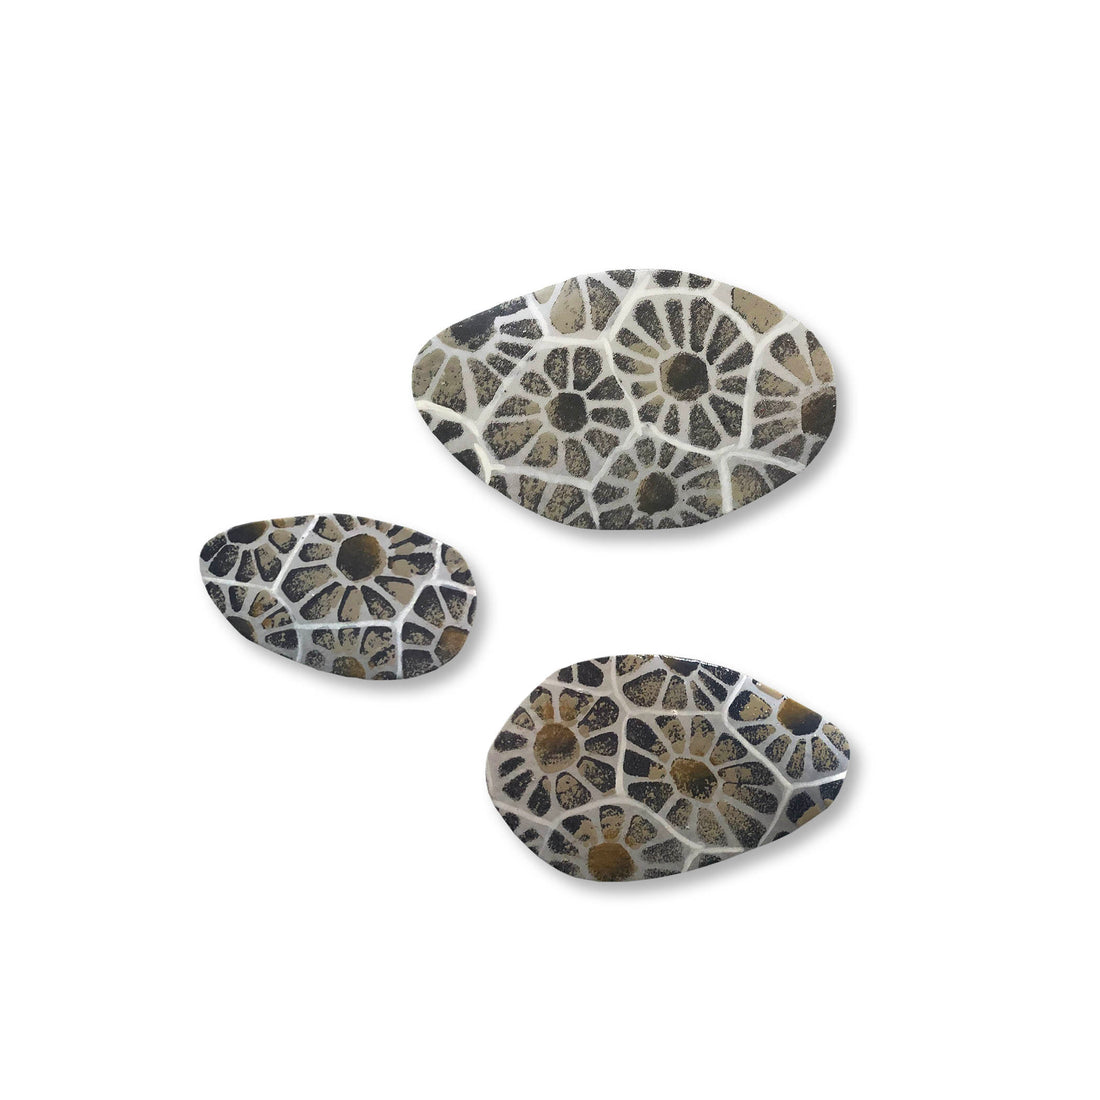 Petoskey Stone Magnets S/3